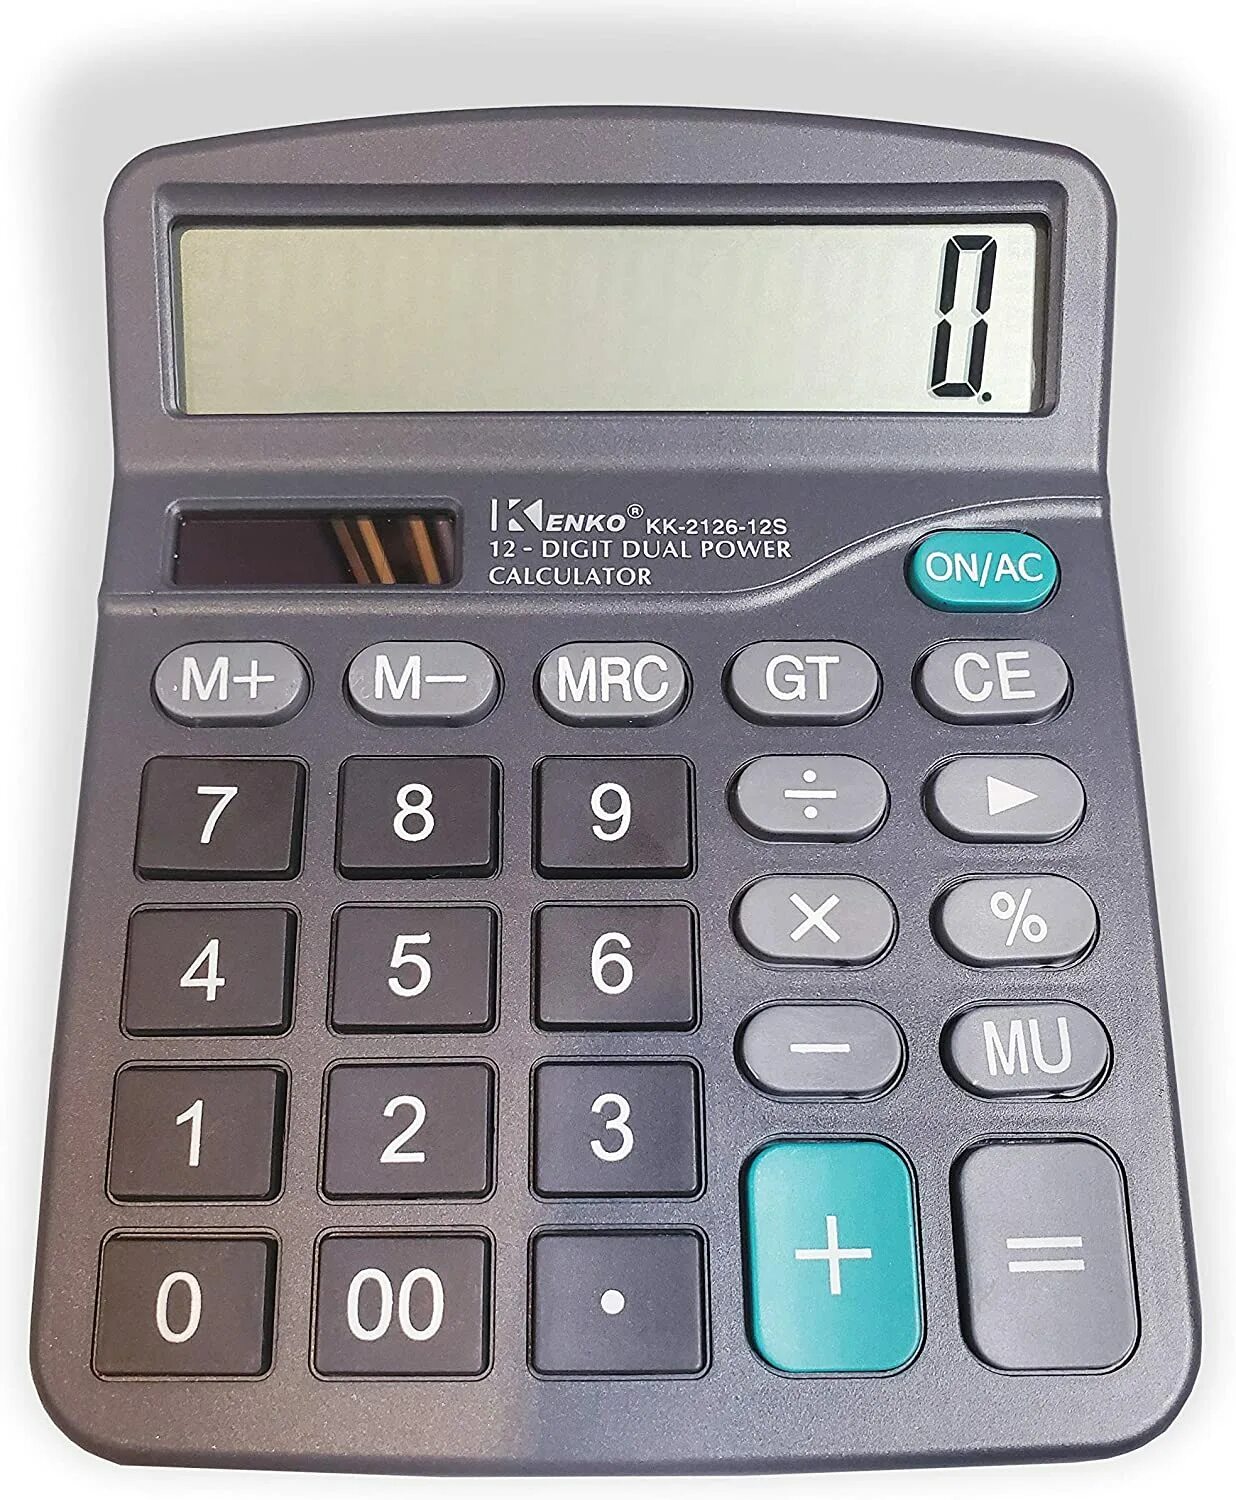 Power calculator. 12 Digit Dual Power calculator. 12 Digit калькулятор Dual. Калькулятор calculator TS-1200tsc. VST SW-8820 12 Digit Dual Power calculator.